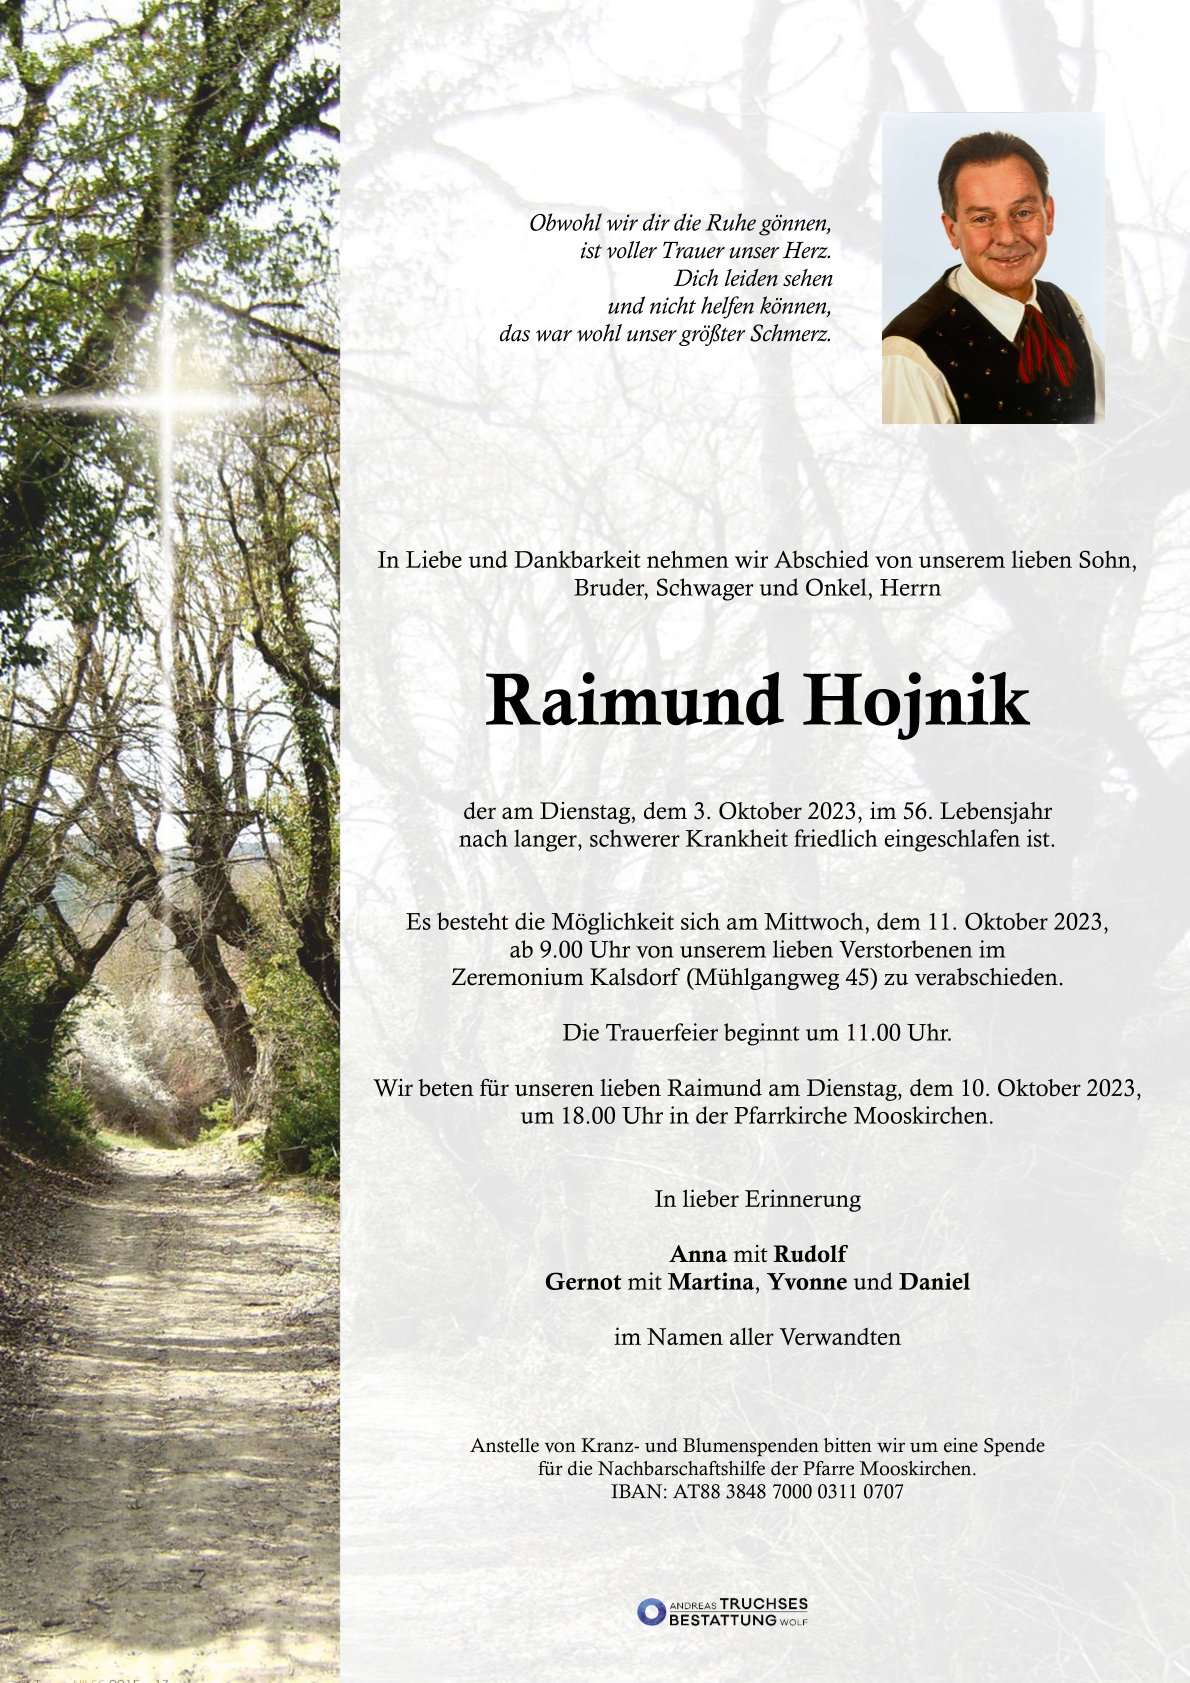 Raimund Hojnik